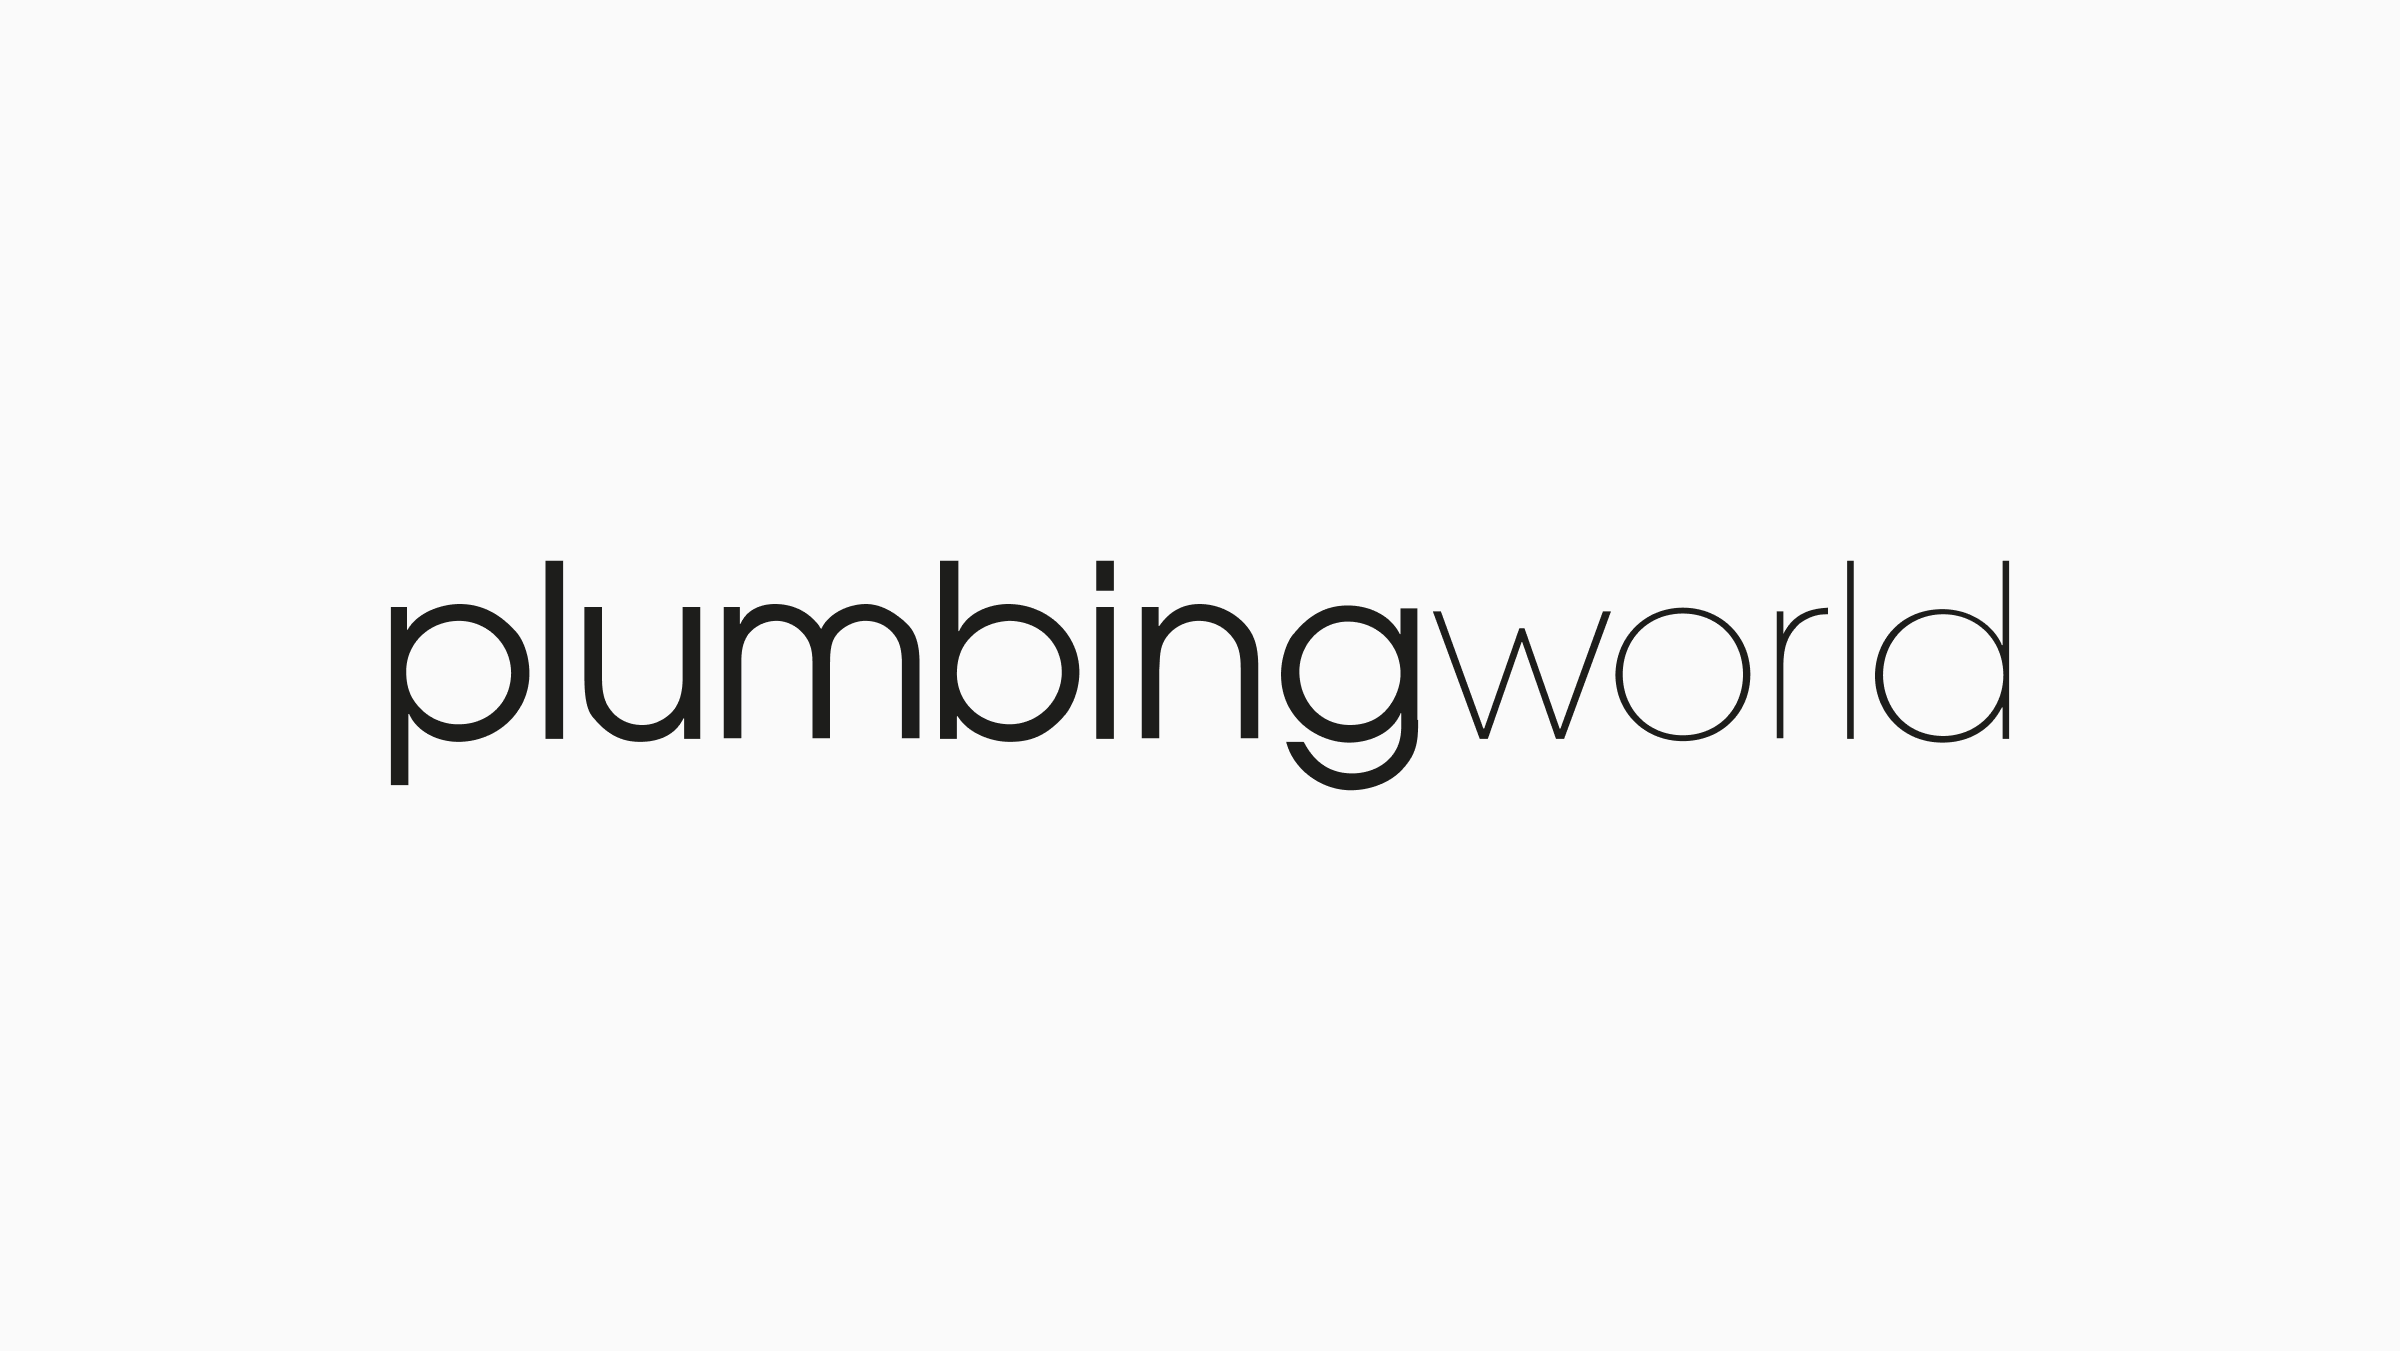 The Plumbing World logo